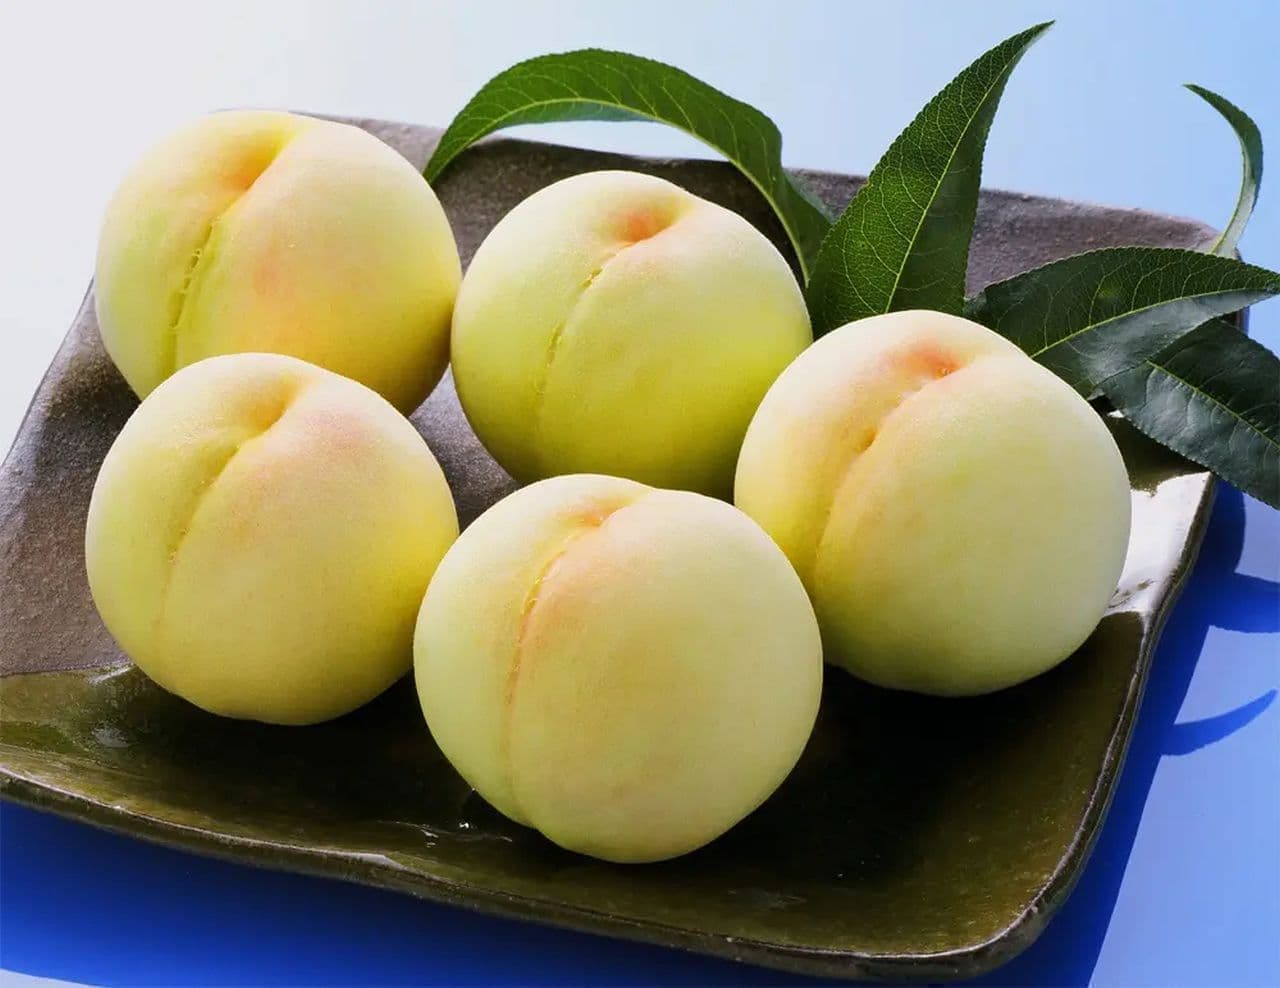 KINOKUNIYA "Okayama Imai Orchard Okayama White Peaches